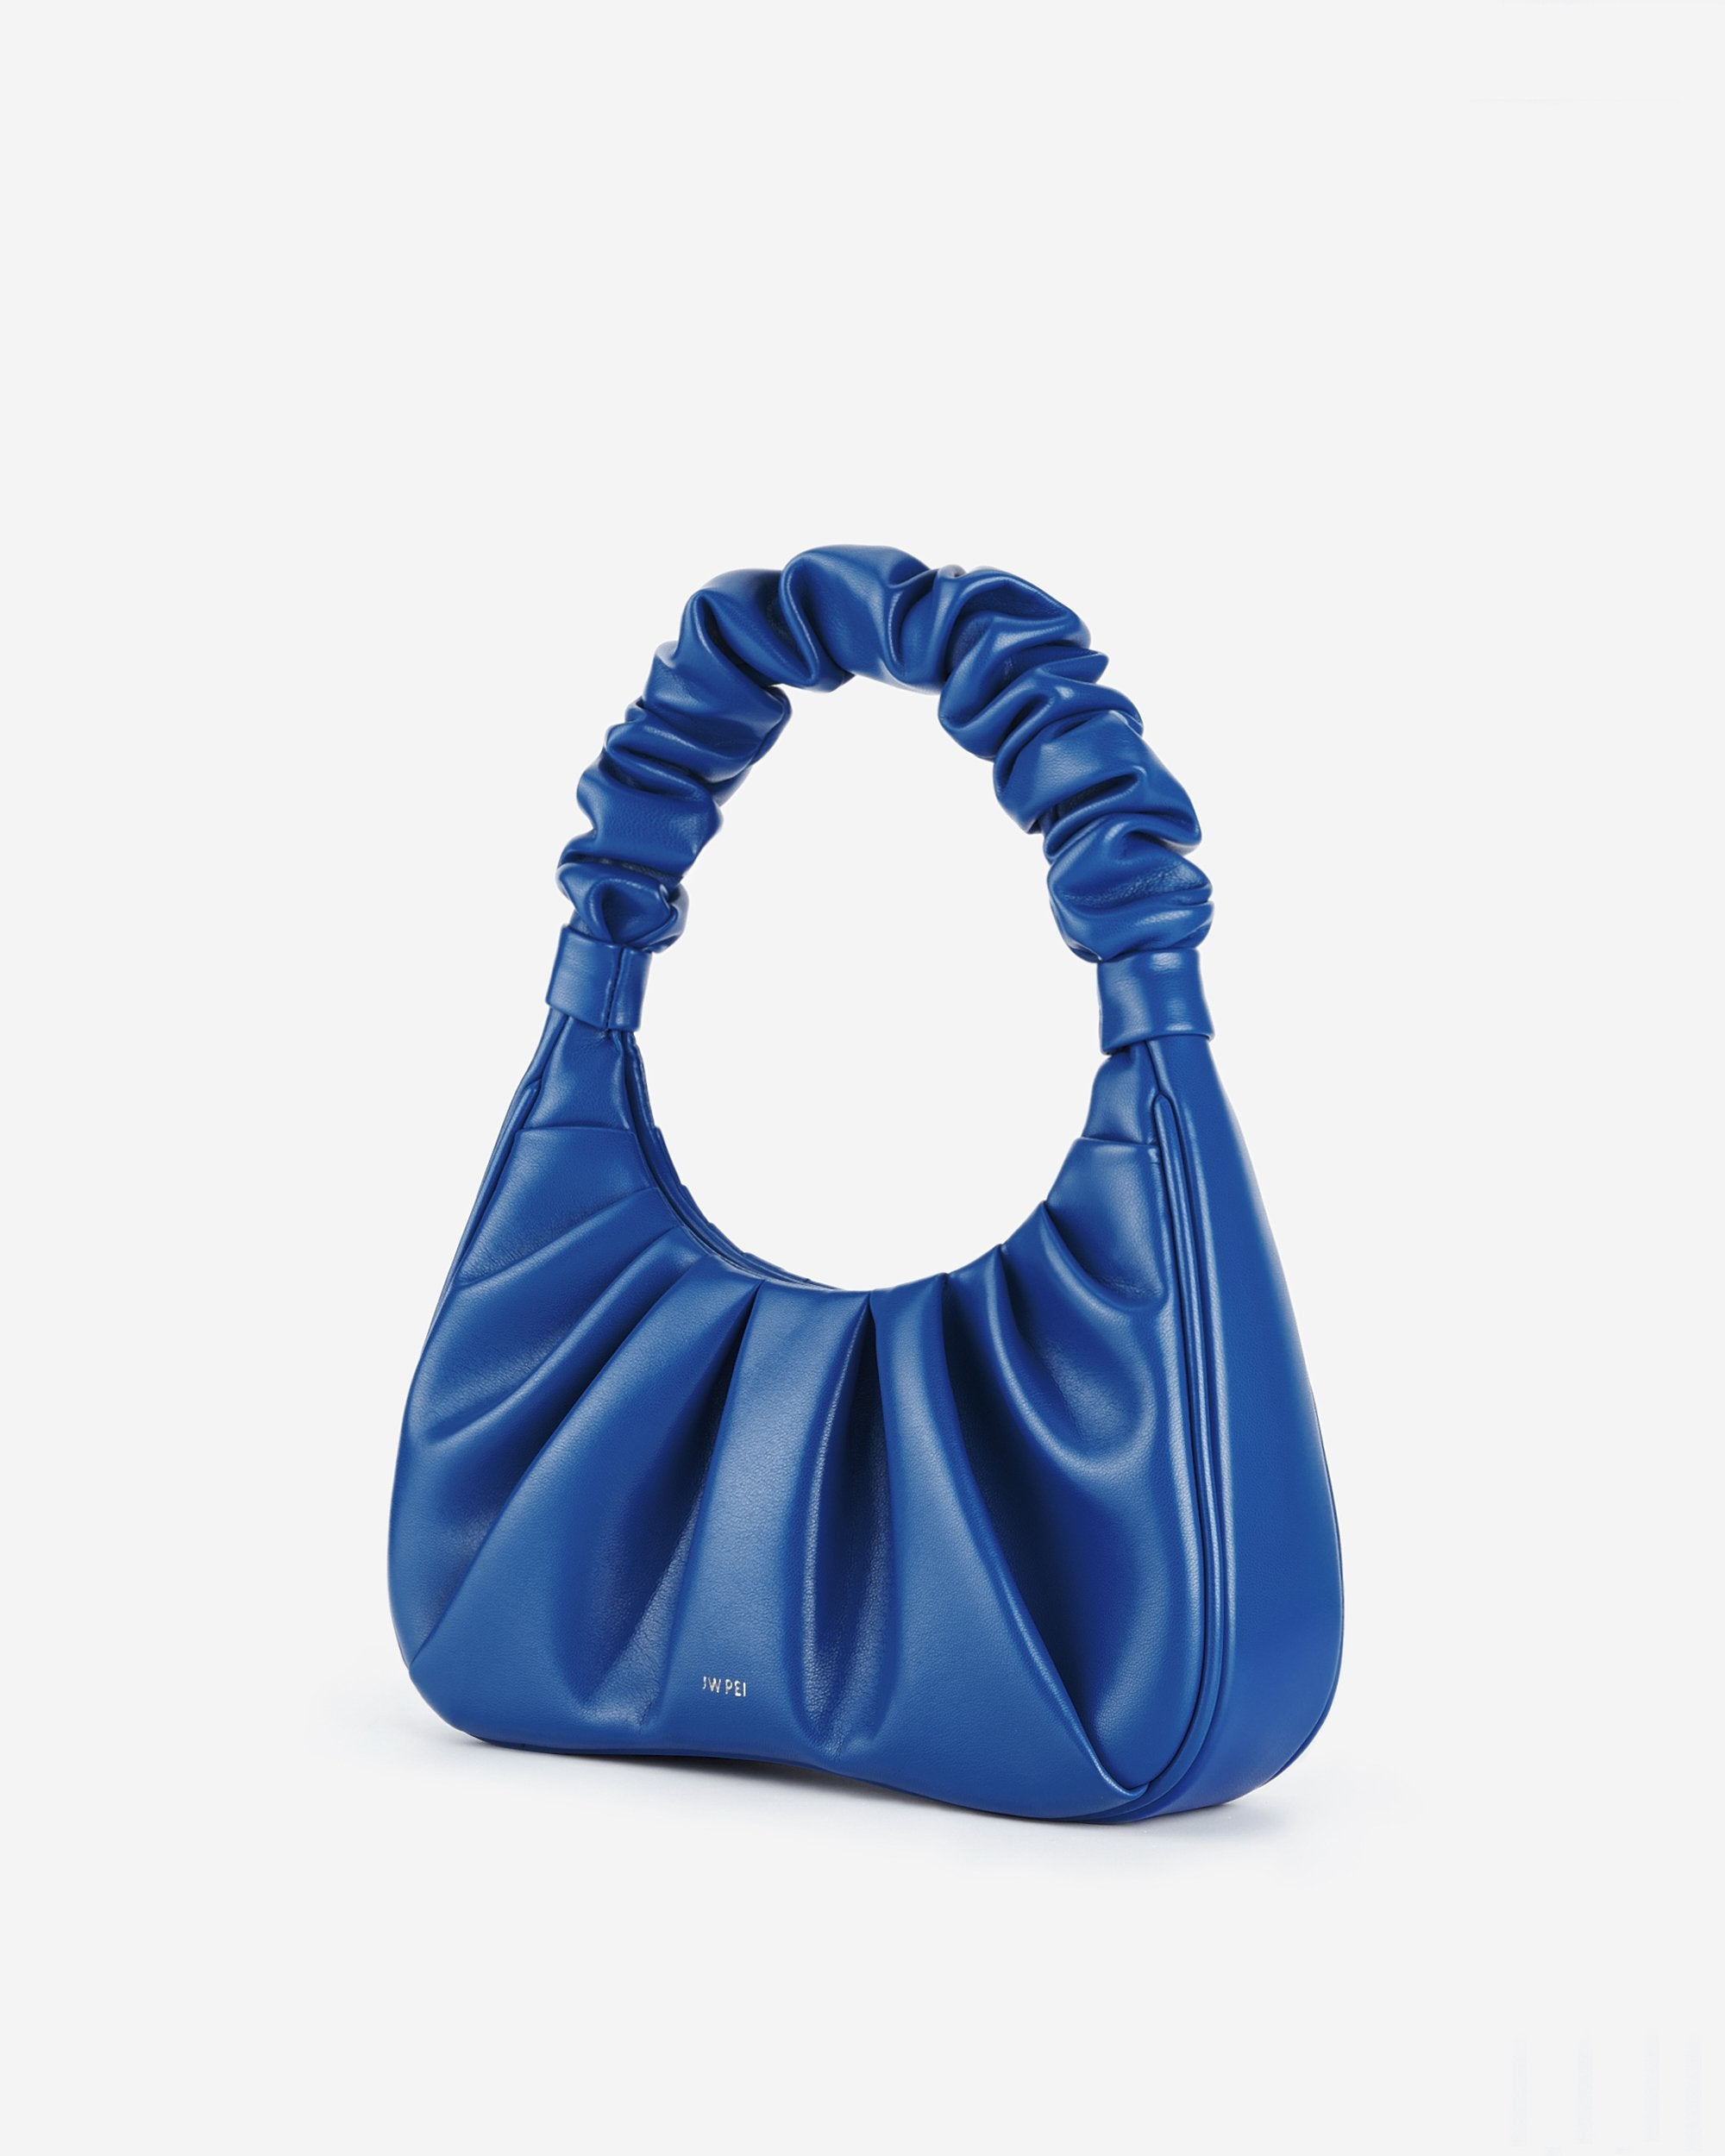 JW PEI Women's Gabbi Ruched Hobo Handbag - Classic Blue